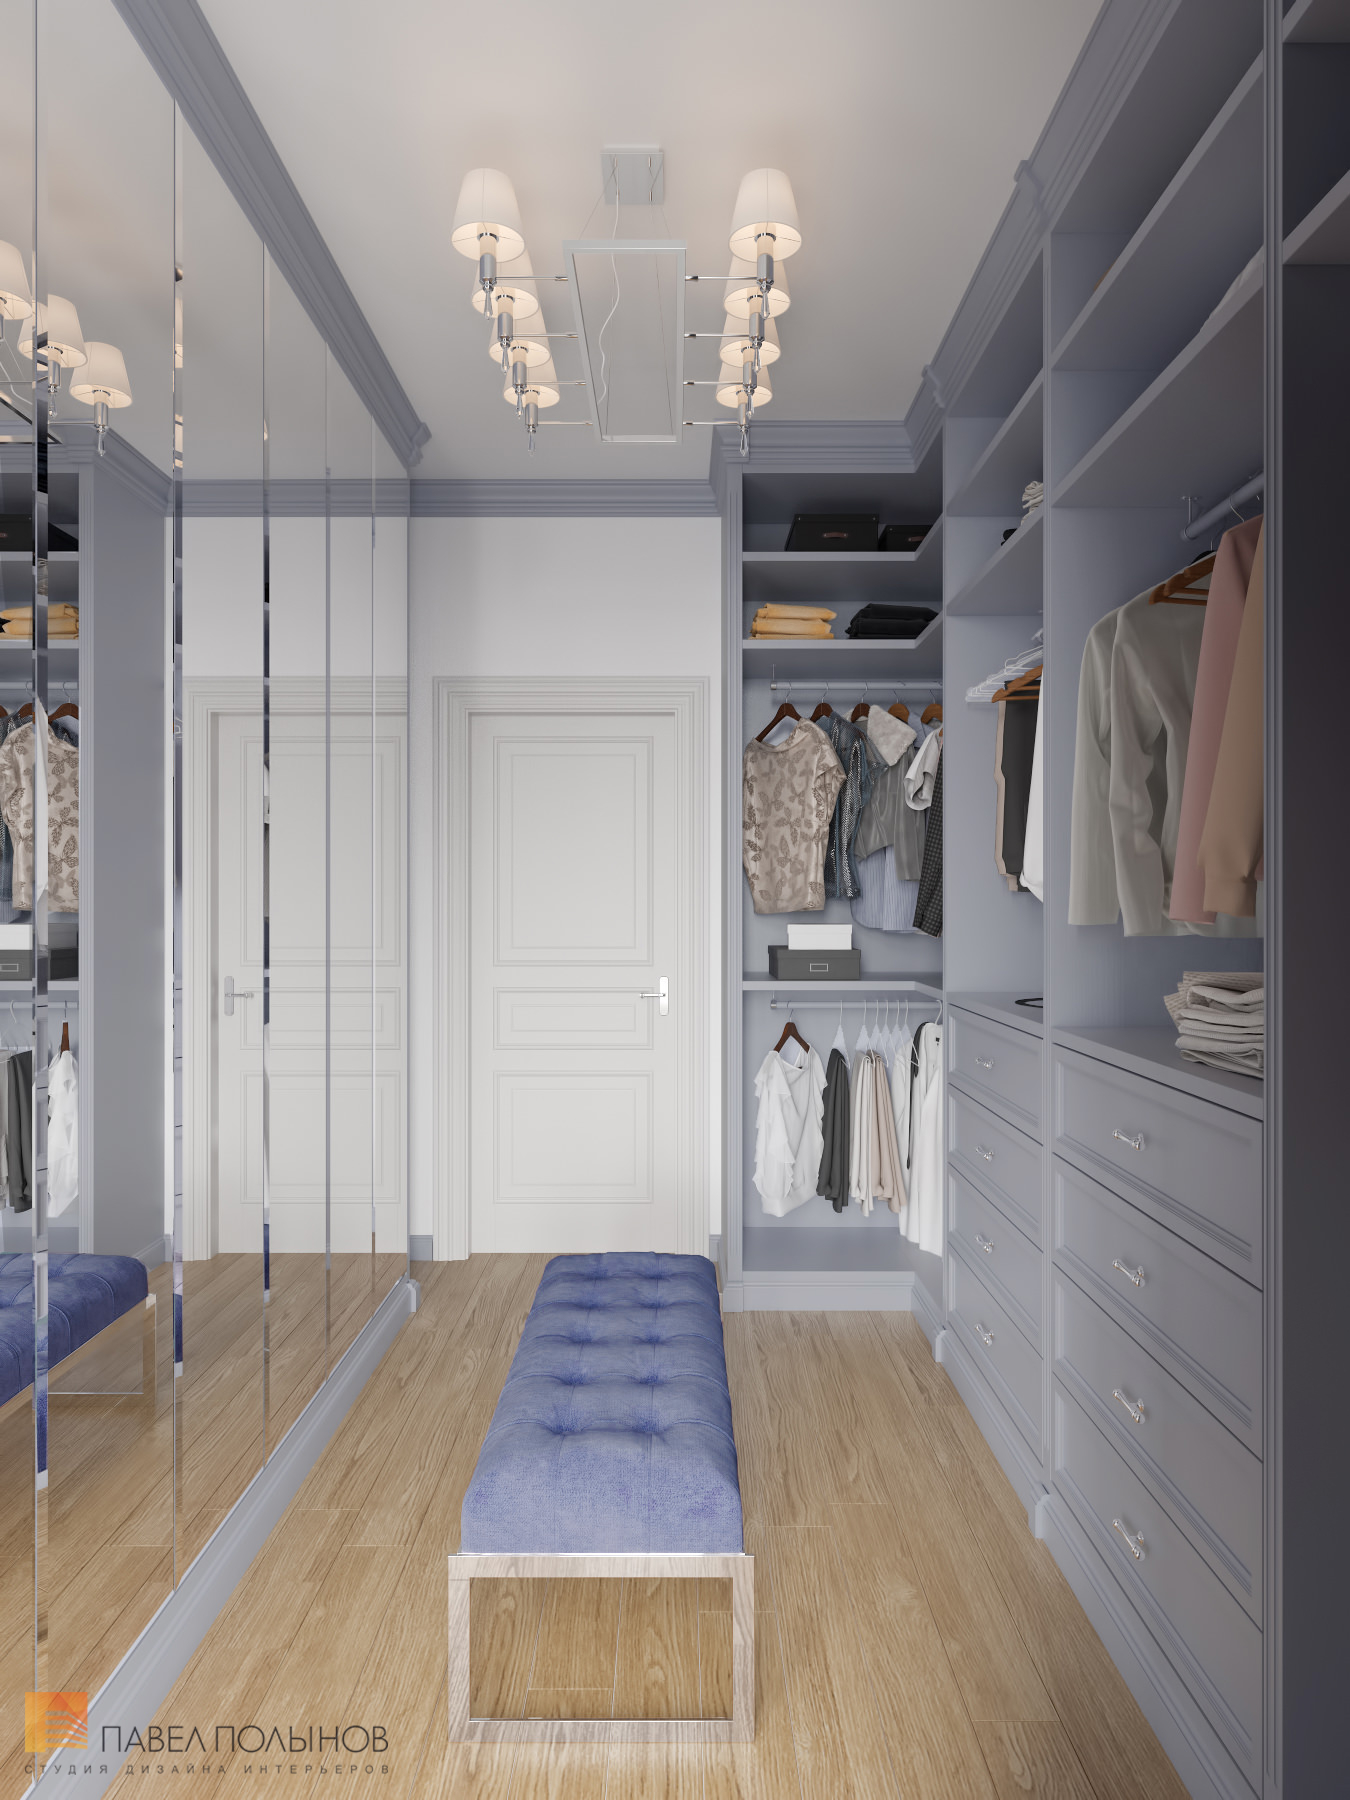 Фото дизайн гардеробной комнаты из проекта «Интерьер квартиры в стиле неоклассики, ЖК «Парадный квартал», 190 кв.м.»